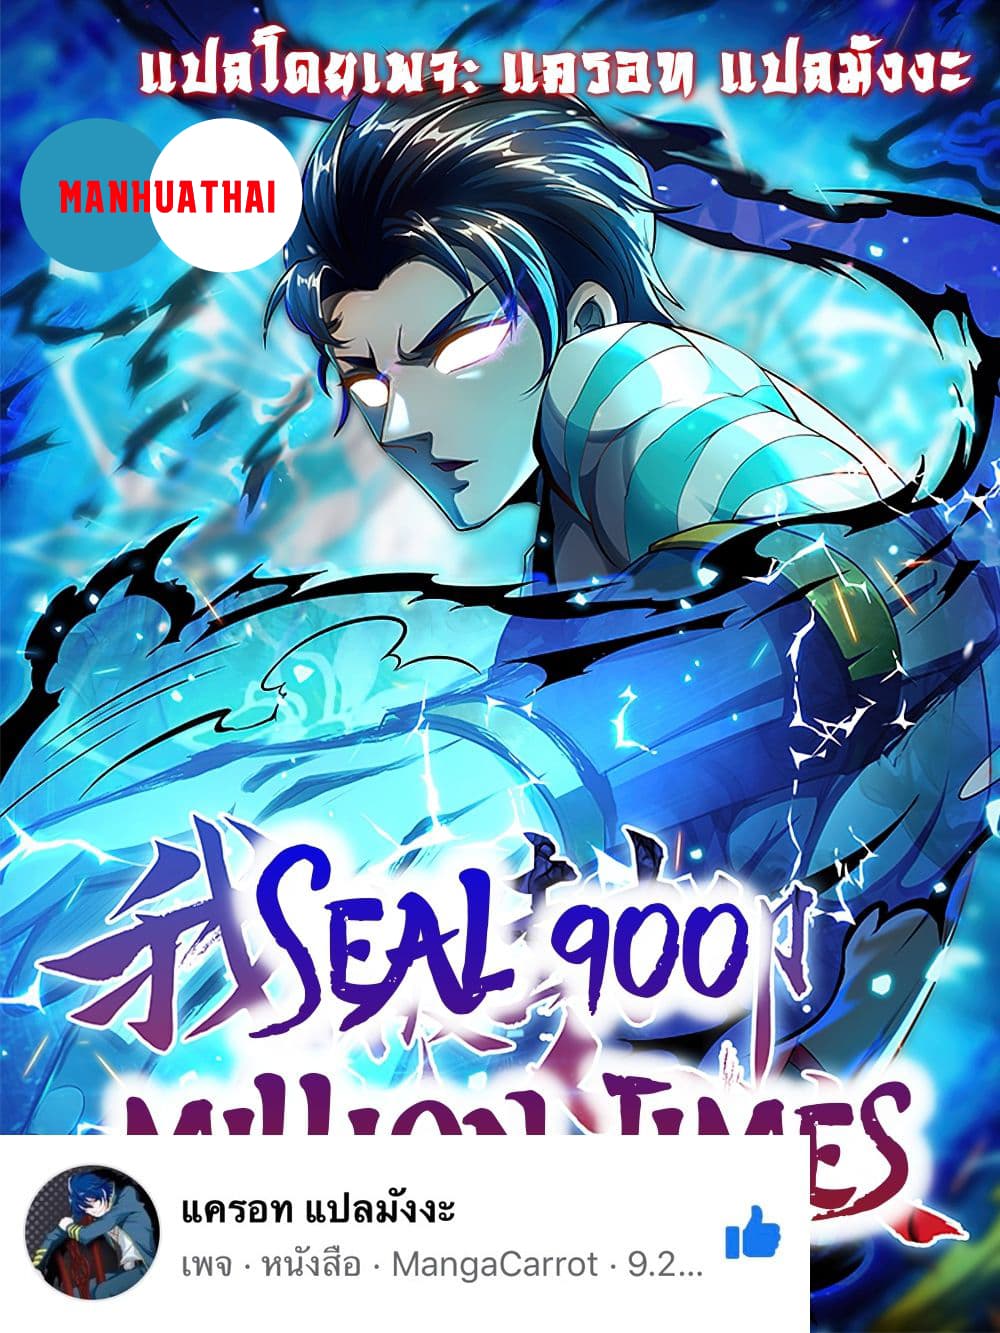 Seal 900 Million Times 19-19